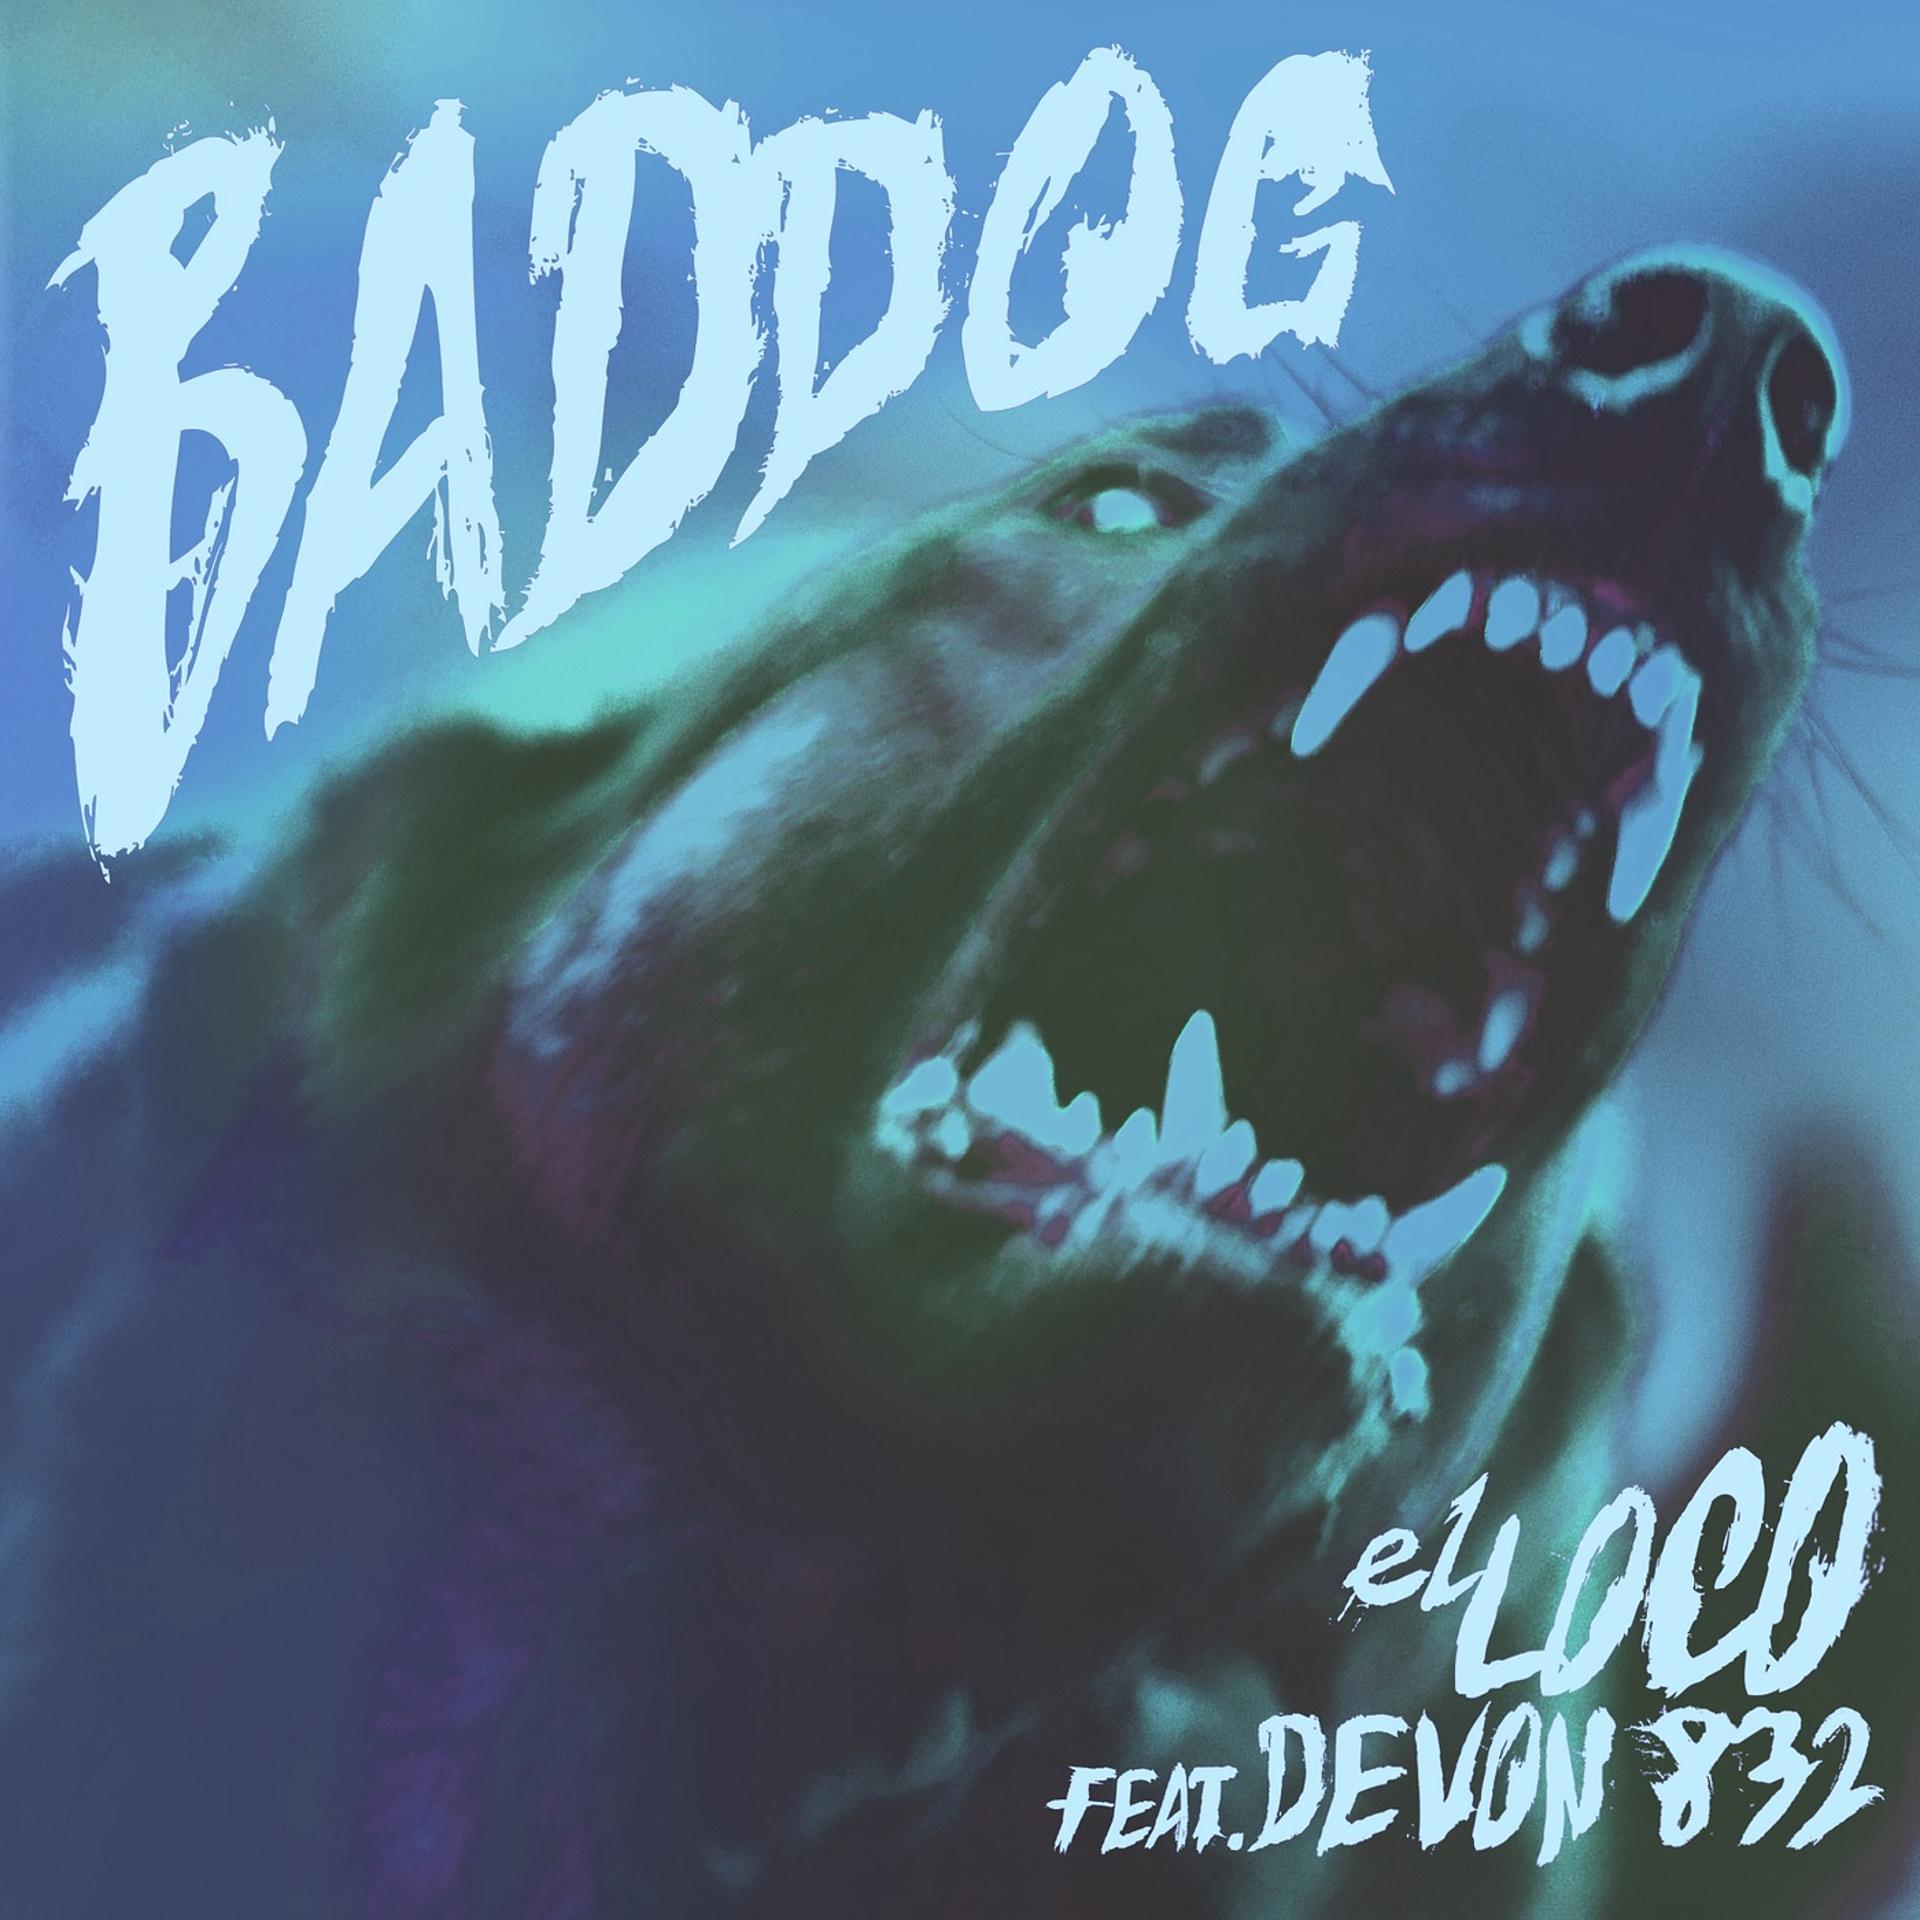 Постер альбома Bad Dog